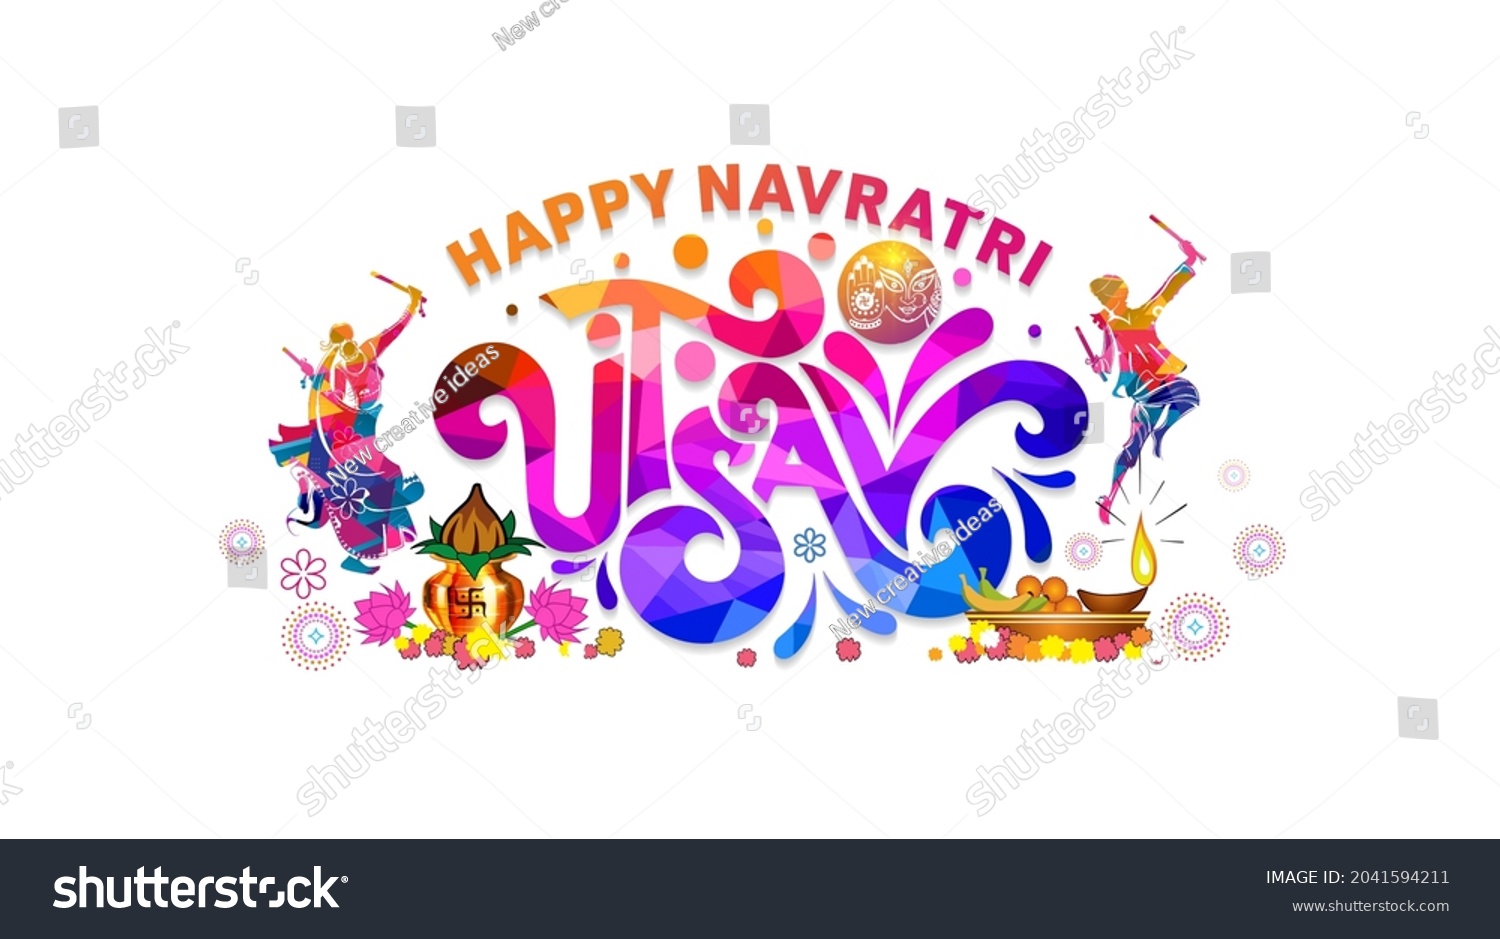 SVG of Navratri festival background and dandiya nights svg